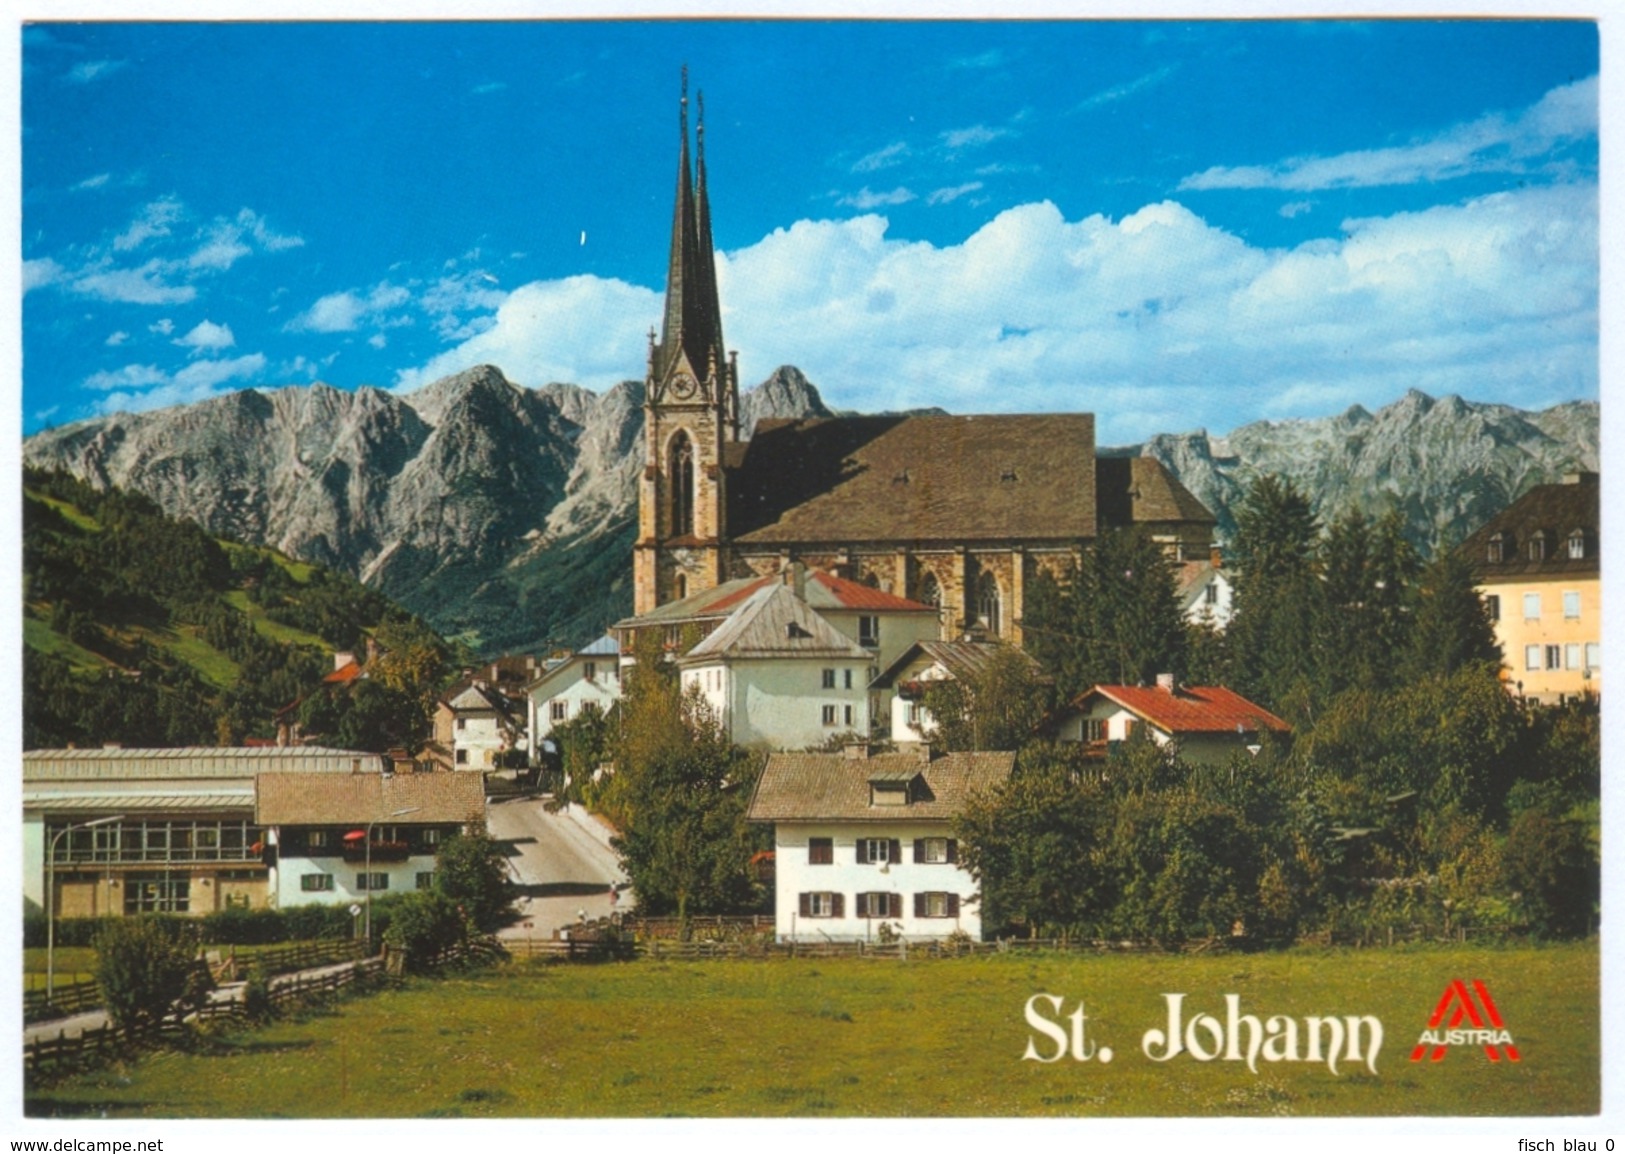 AK Salzburg 5600 St. Johann Im Pongau Kirche Alpendorf Österreich Ansichtskarte Verlag W. Oczlon I.P. Austria Autriche - St. Johann Im Pongau